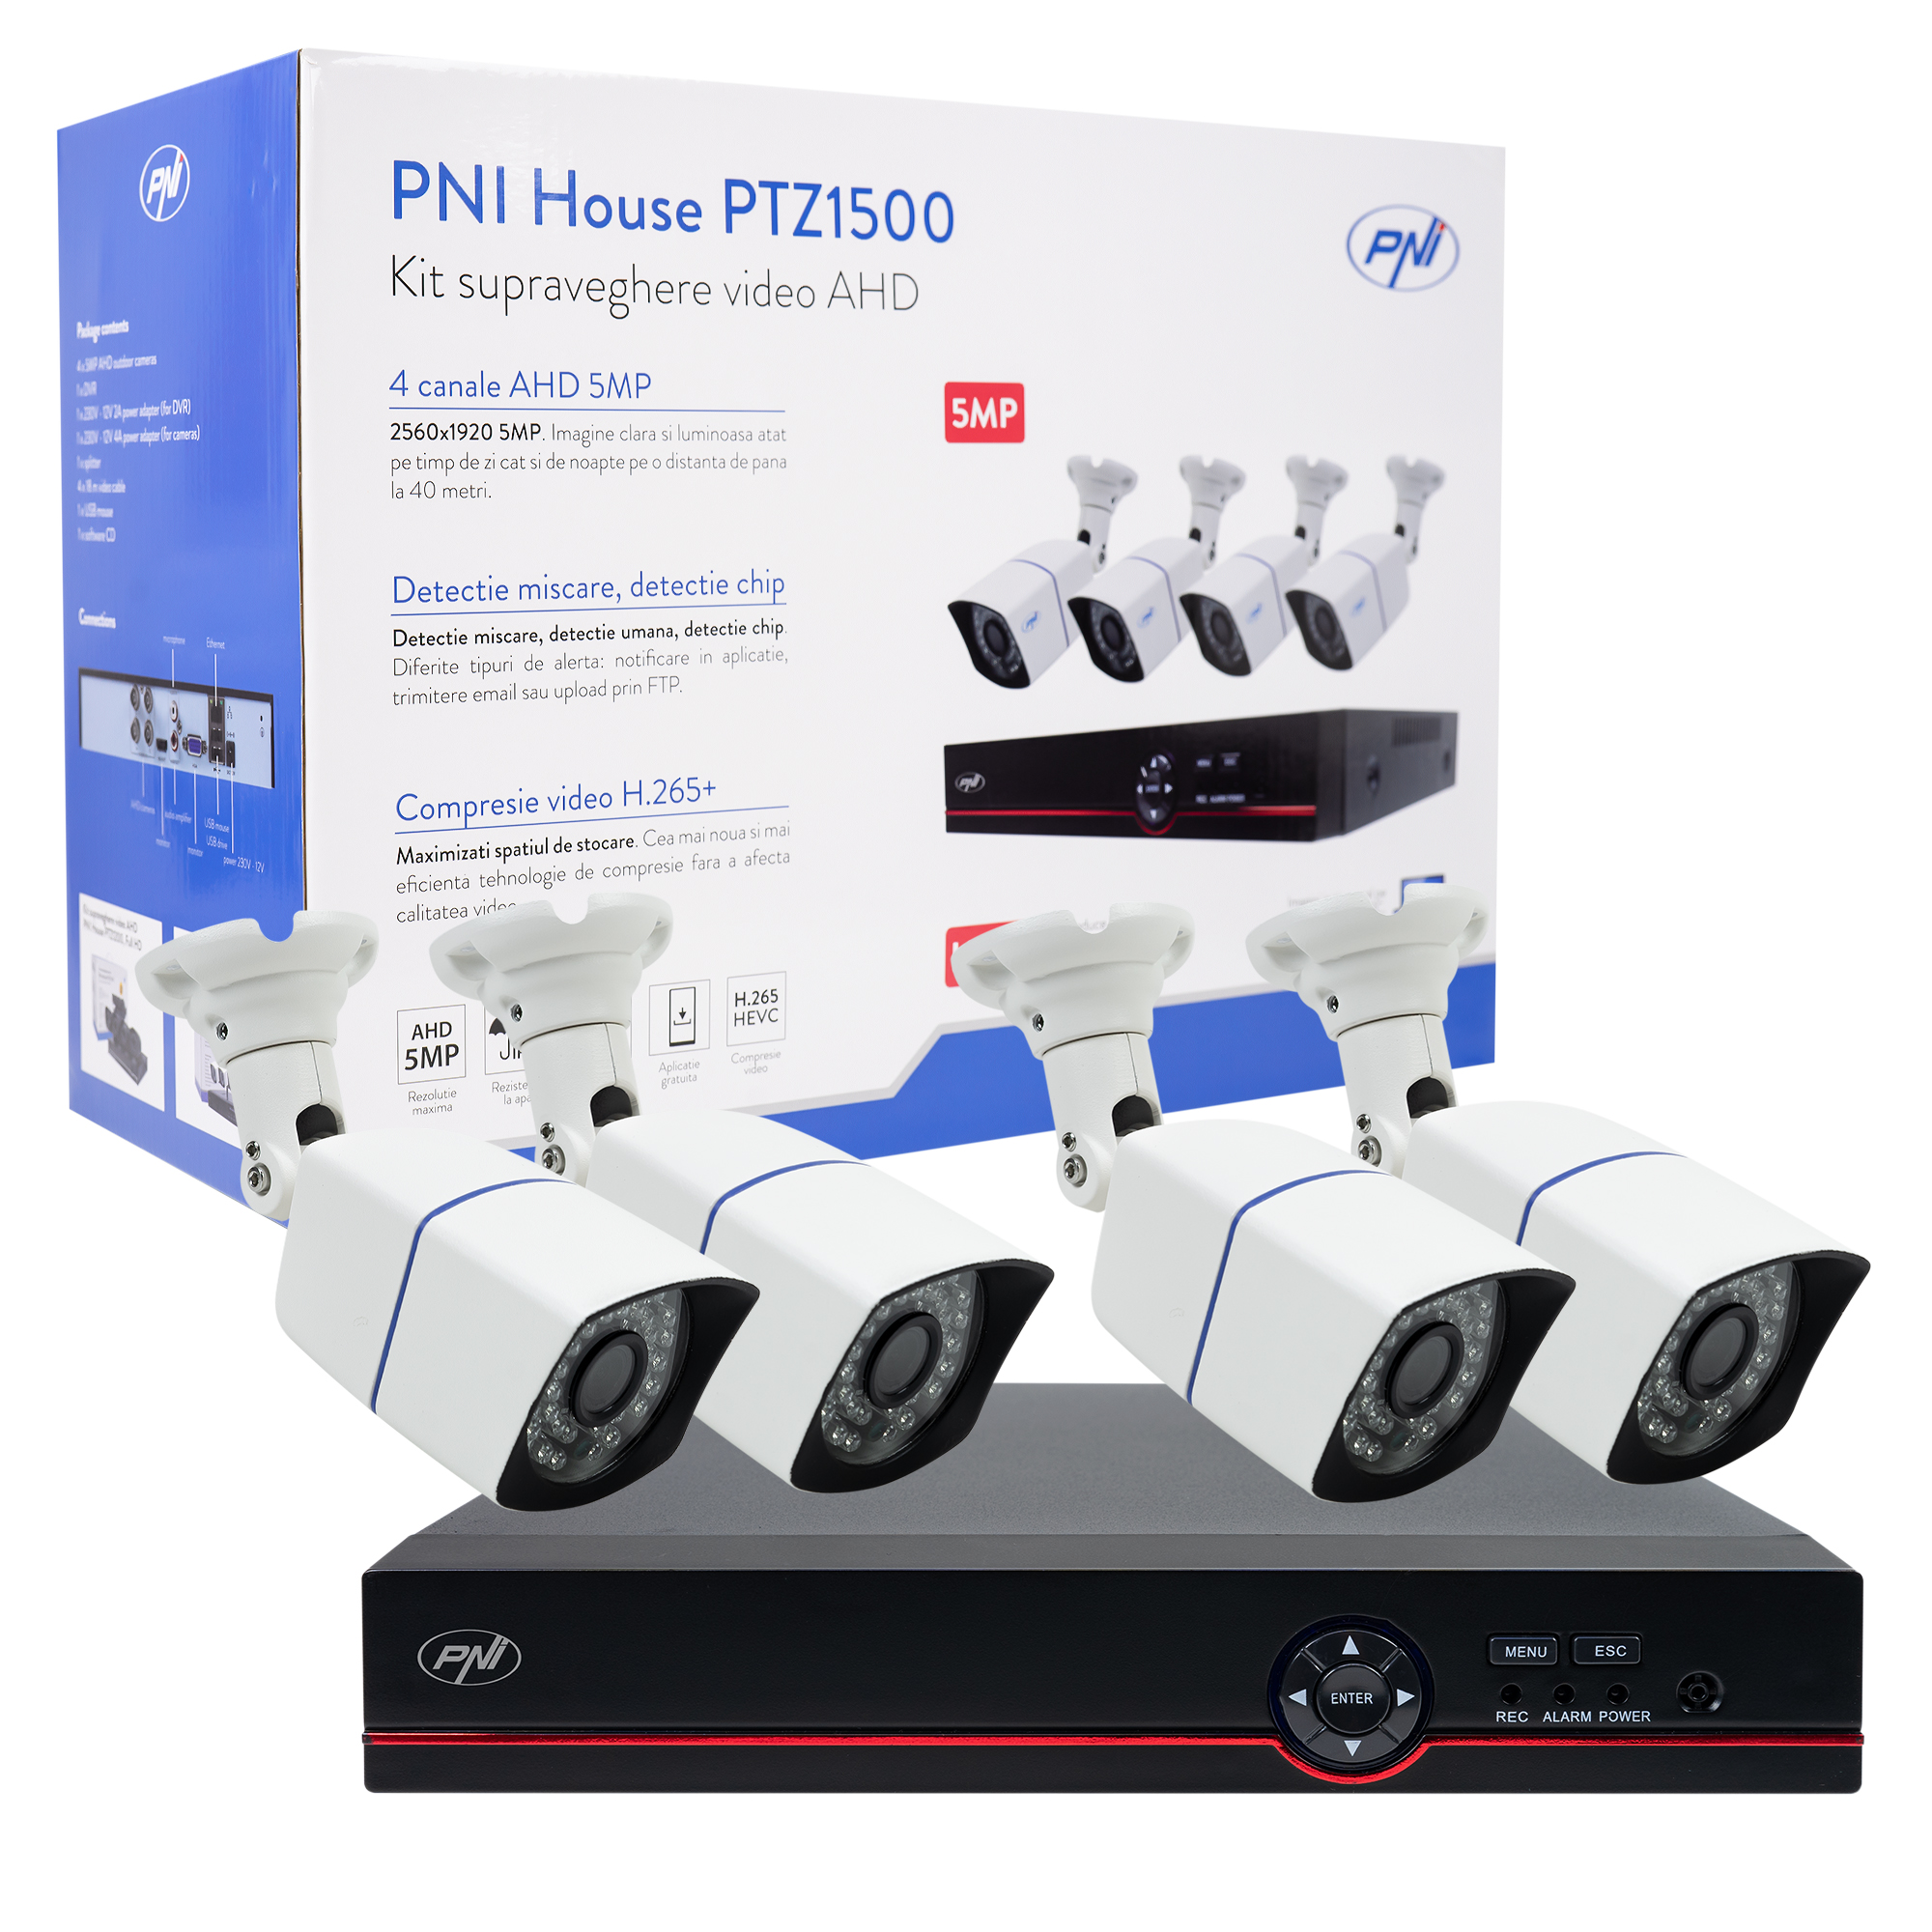 Kit de videovigilancia AHD PNI House PTZ1500 5MP - DVR y 4 cámaras exteriores